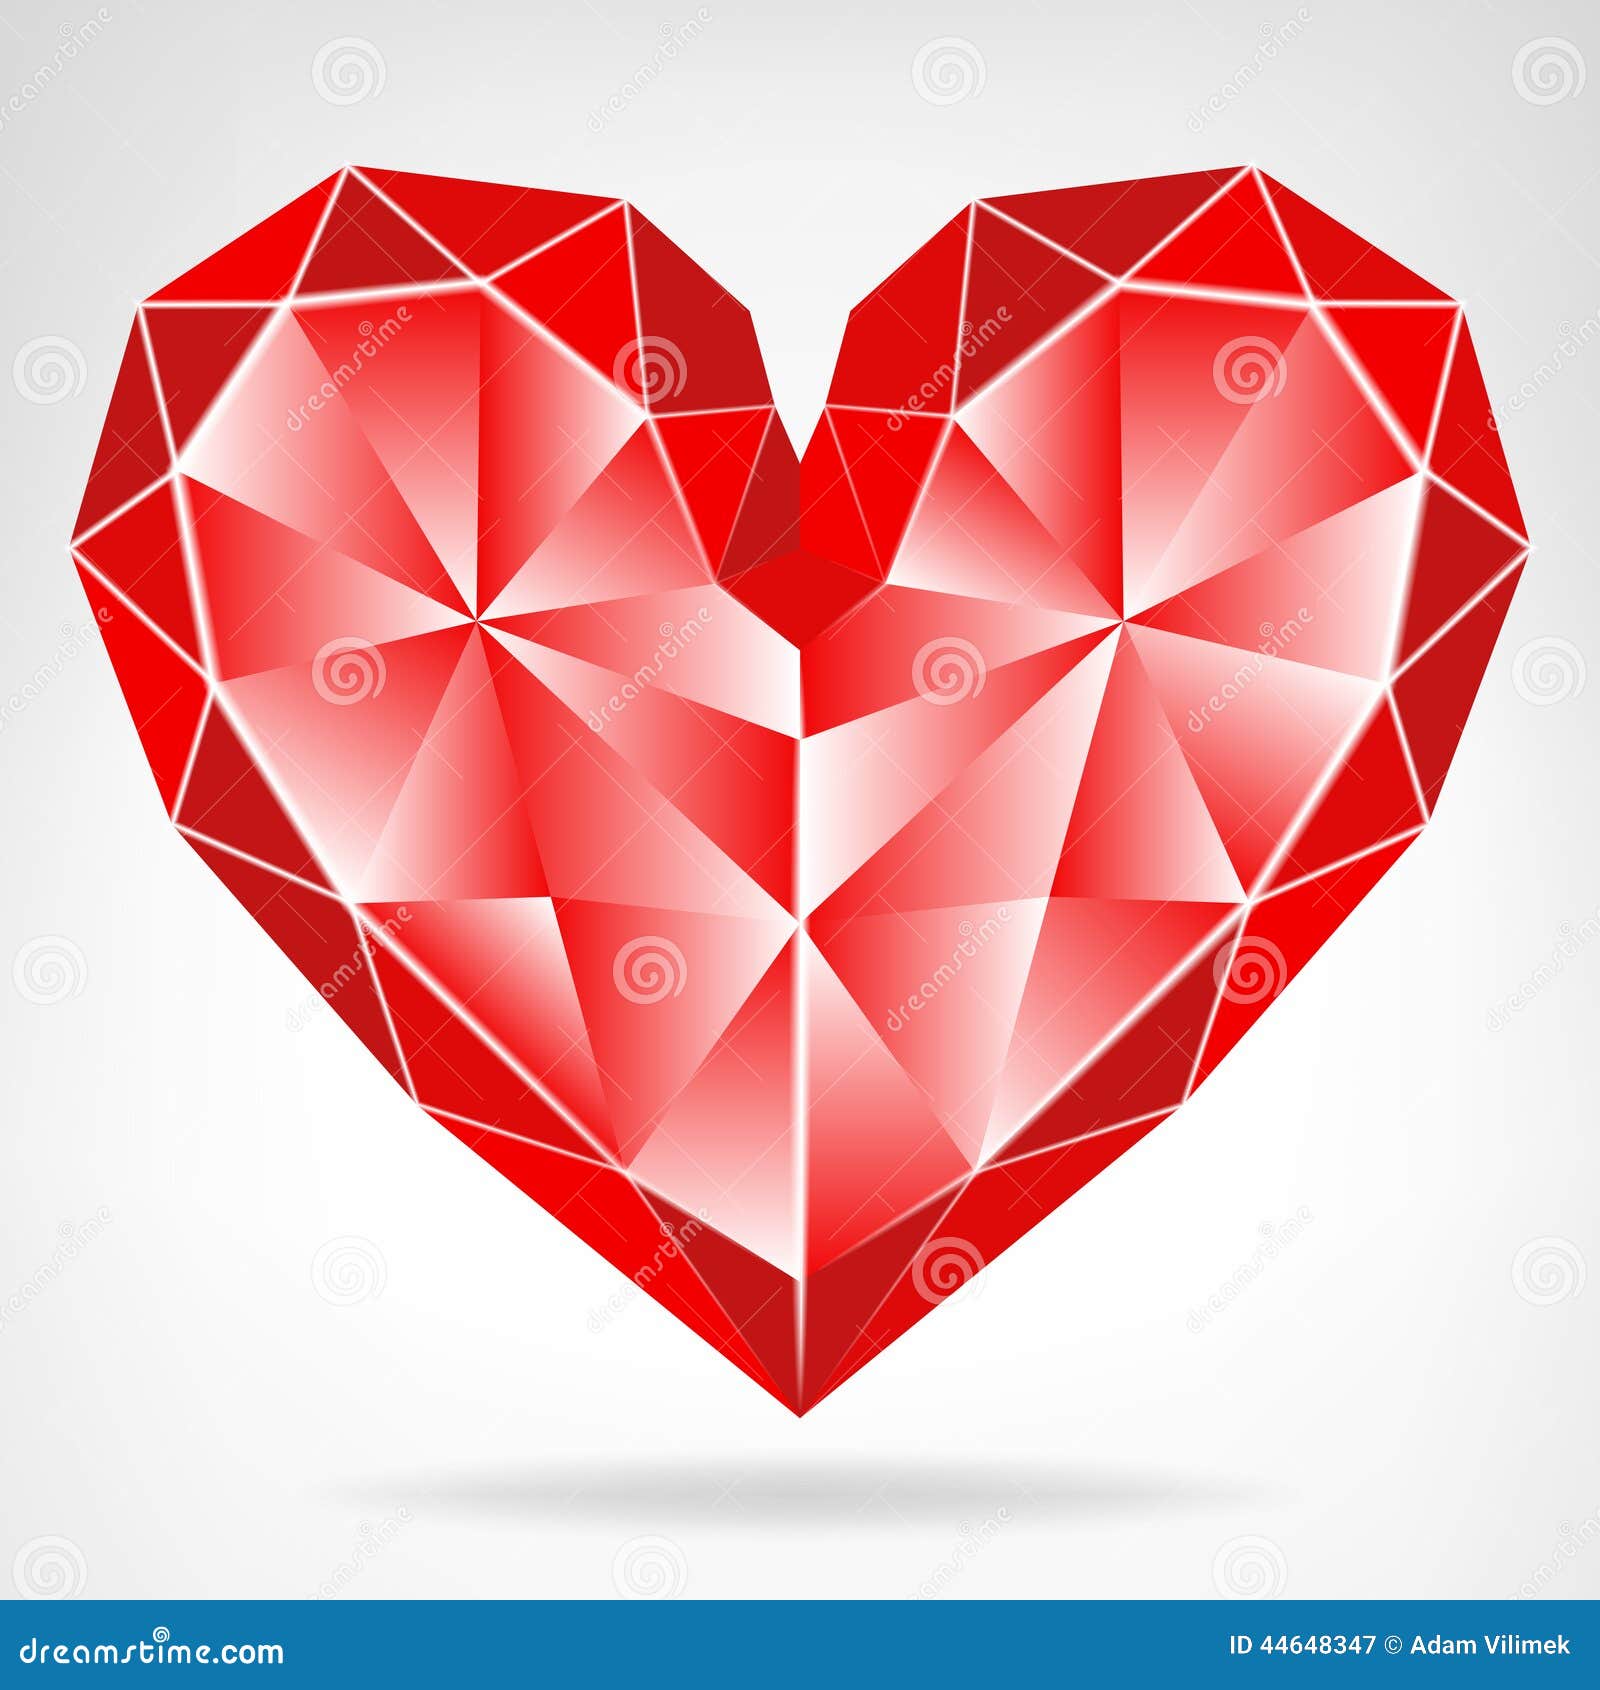 diamond heart clipart - photo #23